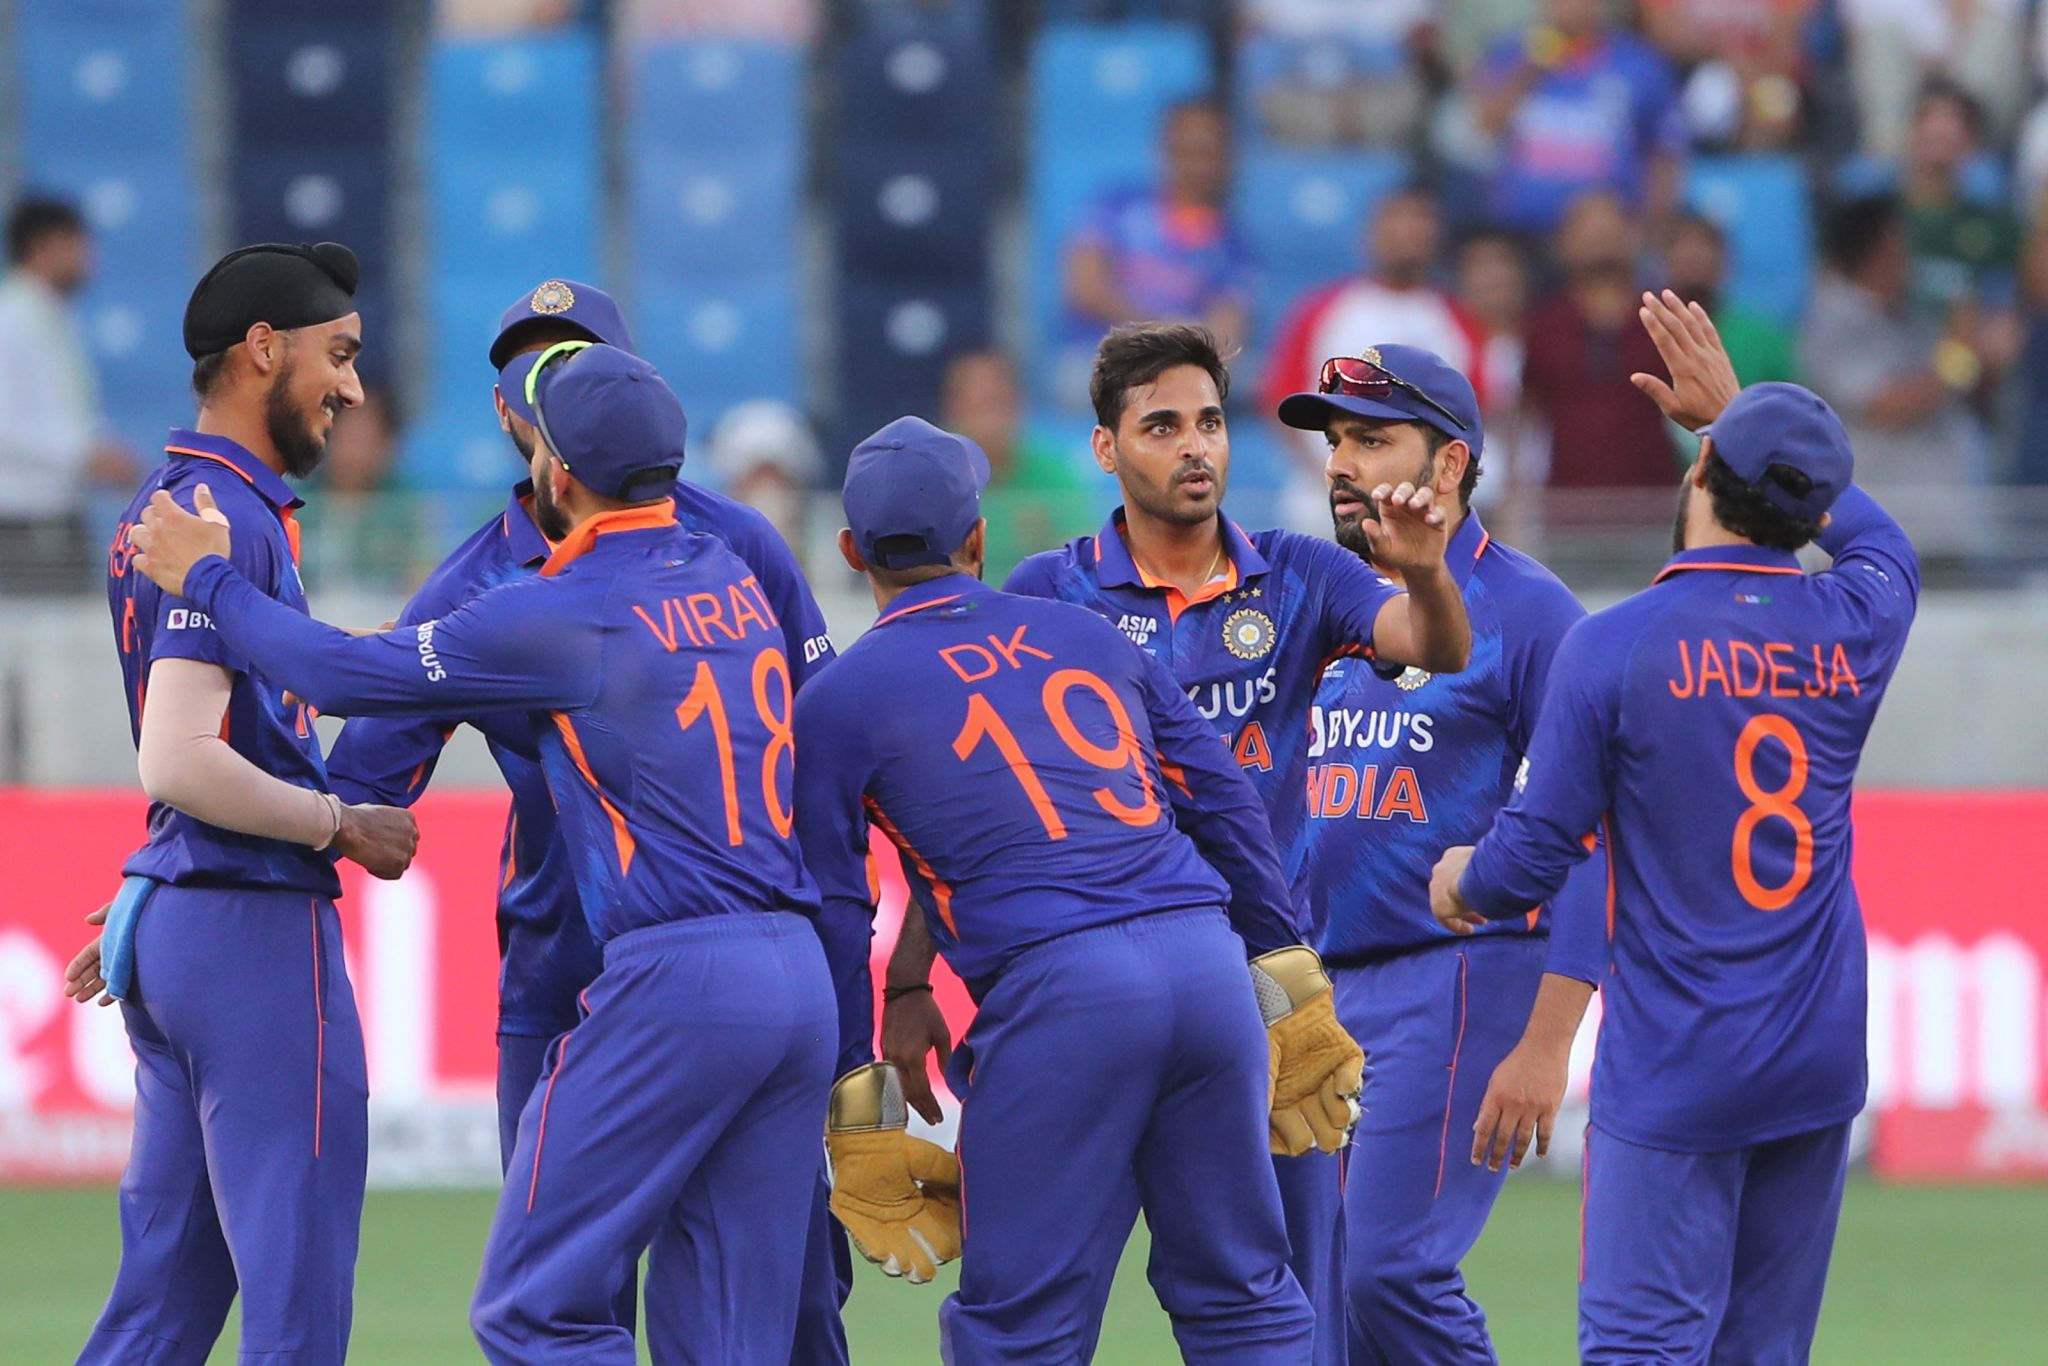 IND vs HKG - Team India